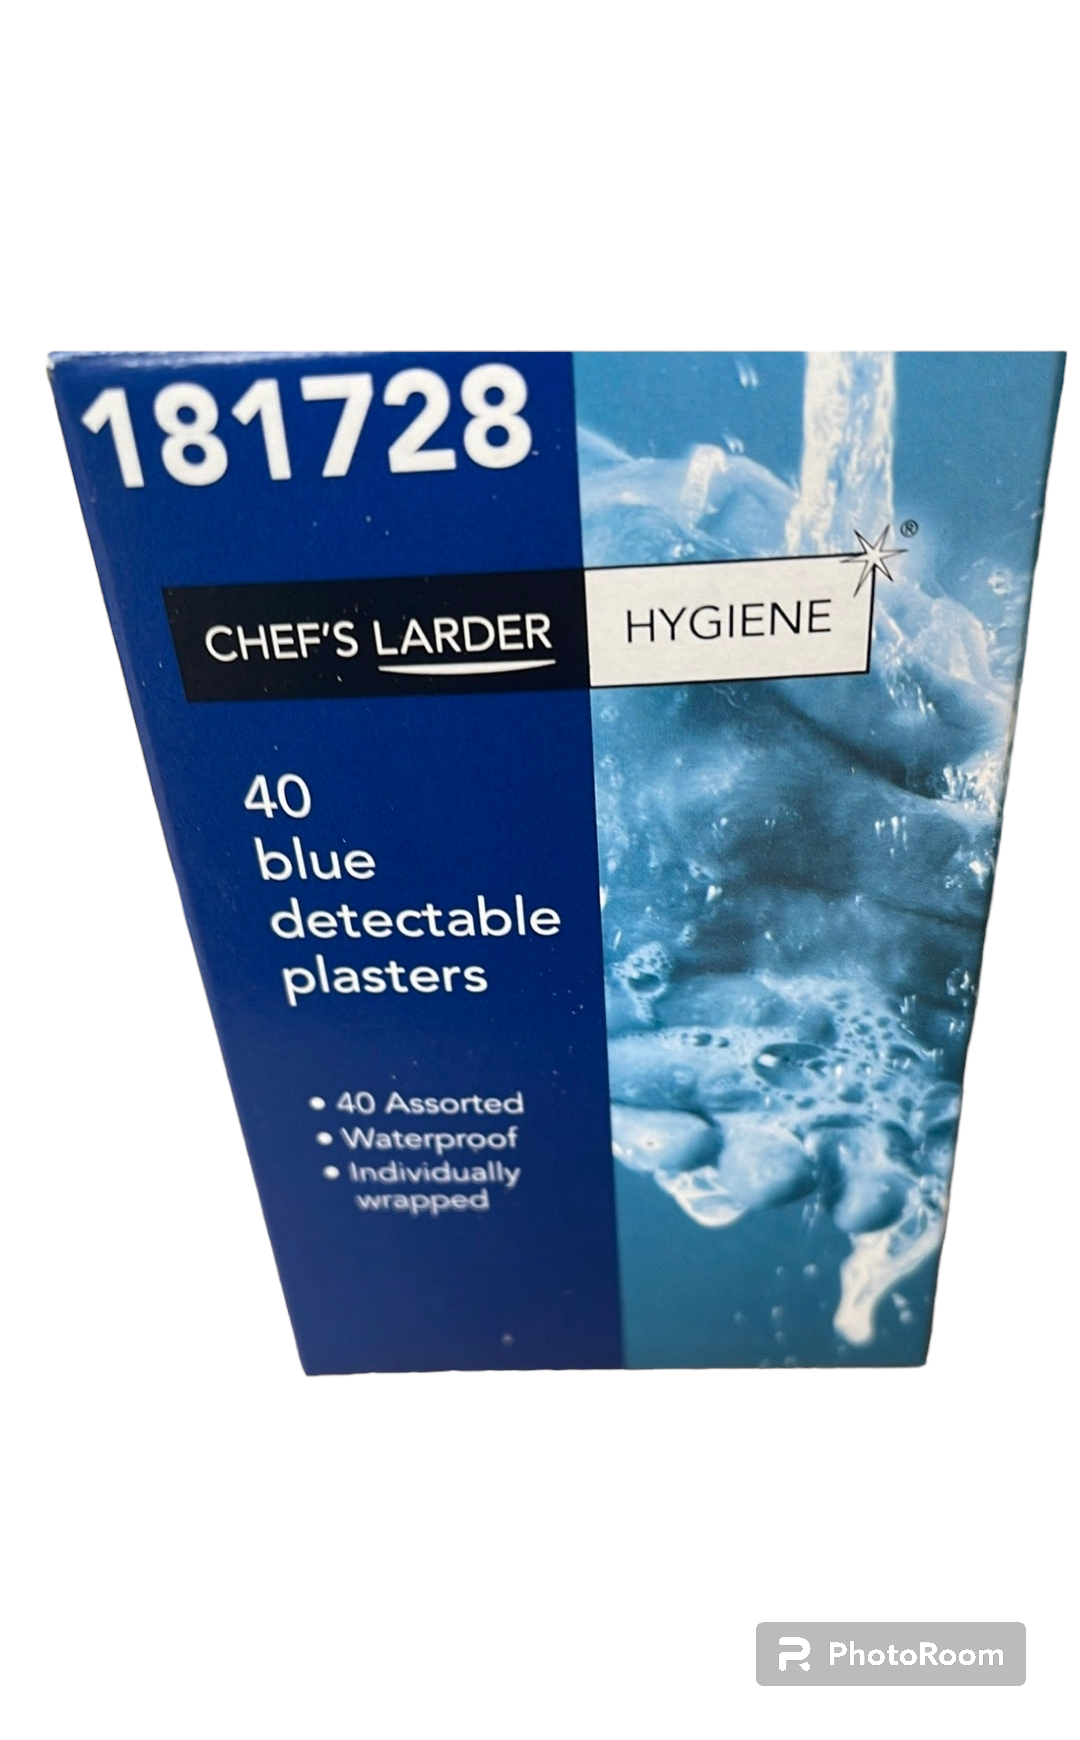 Blue detectable plasters